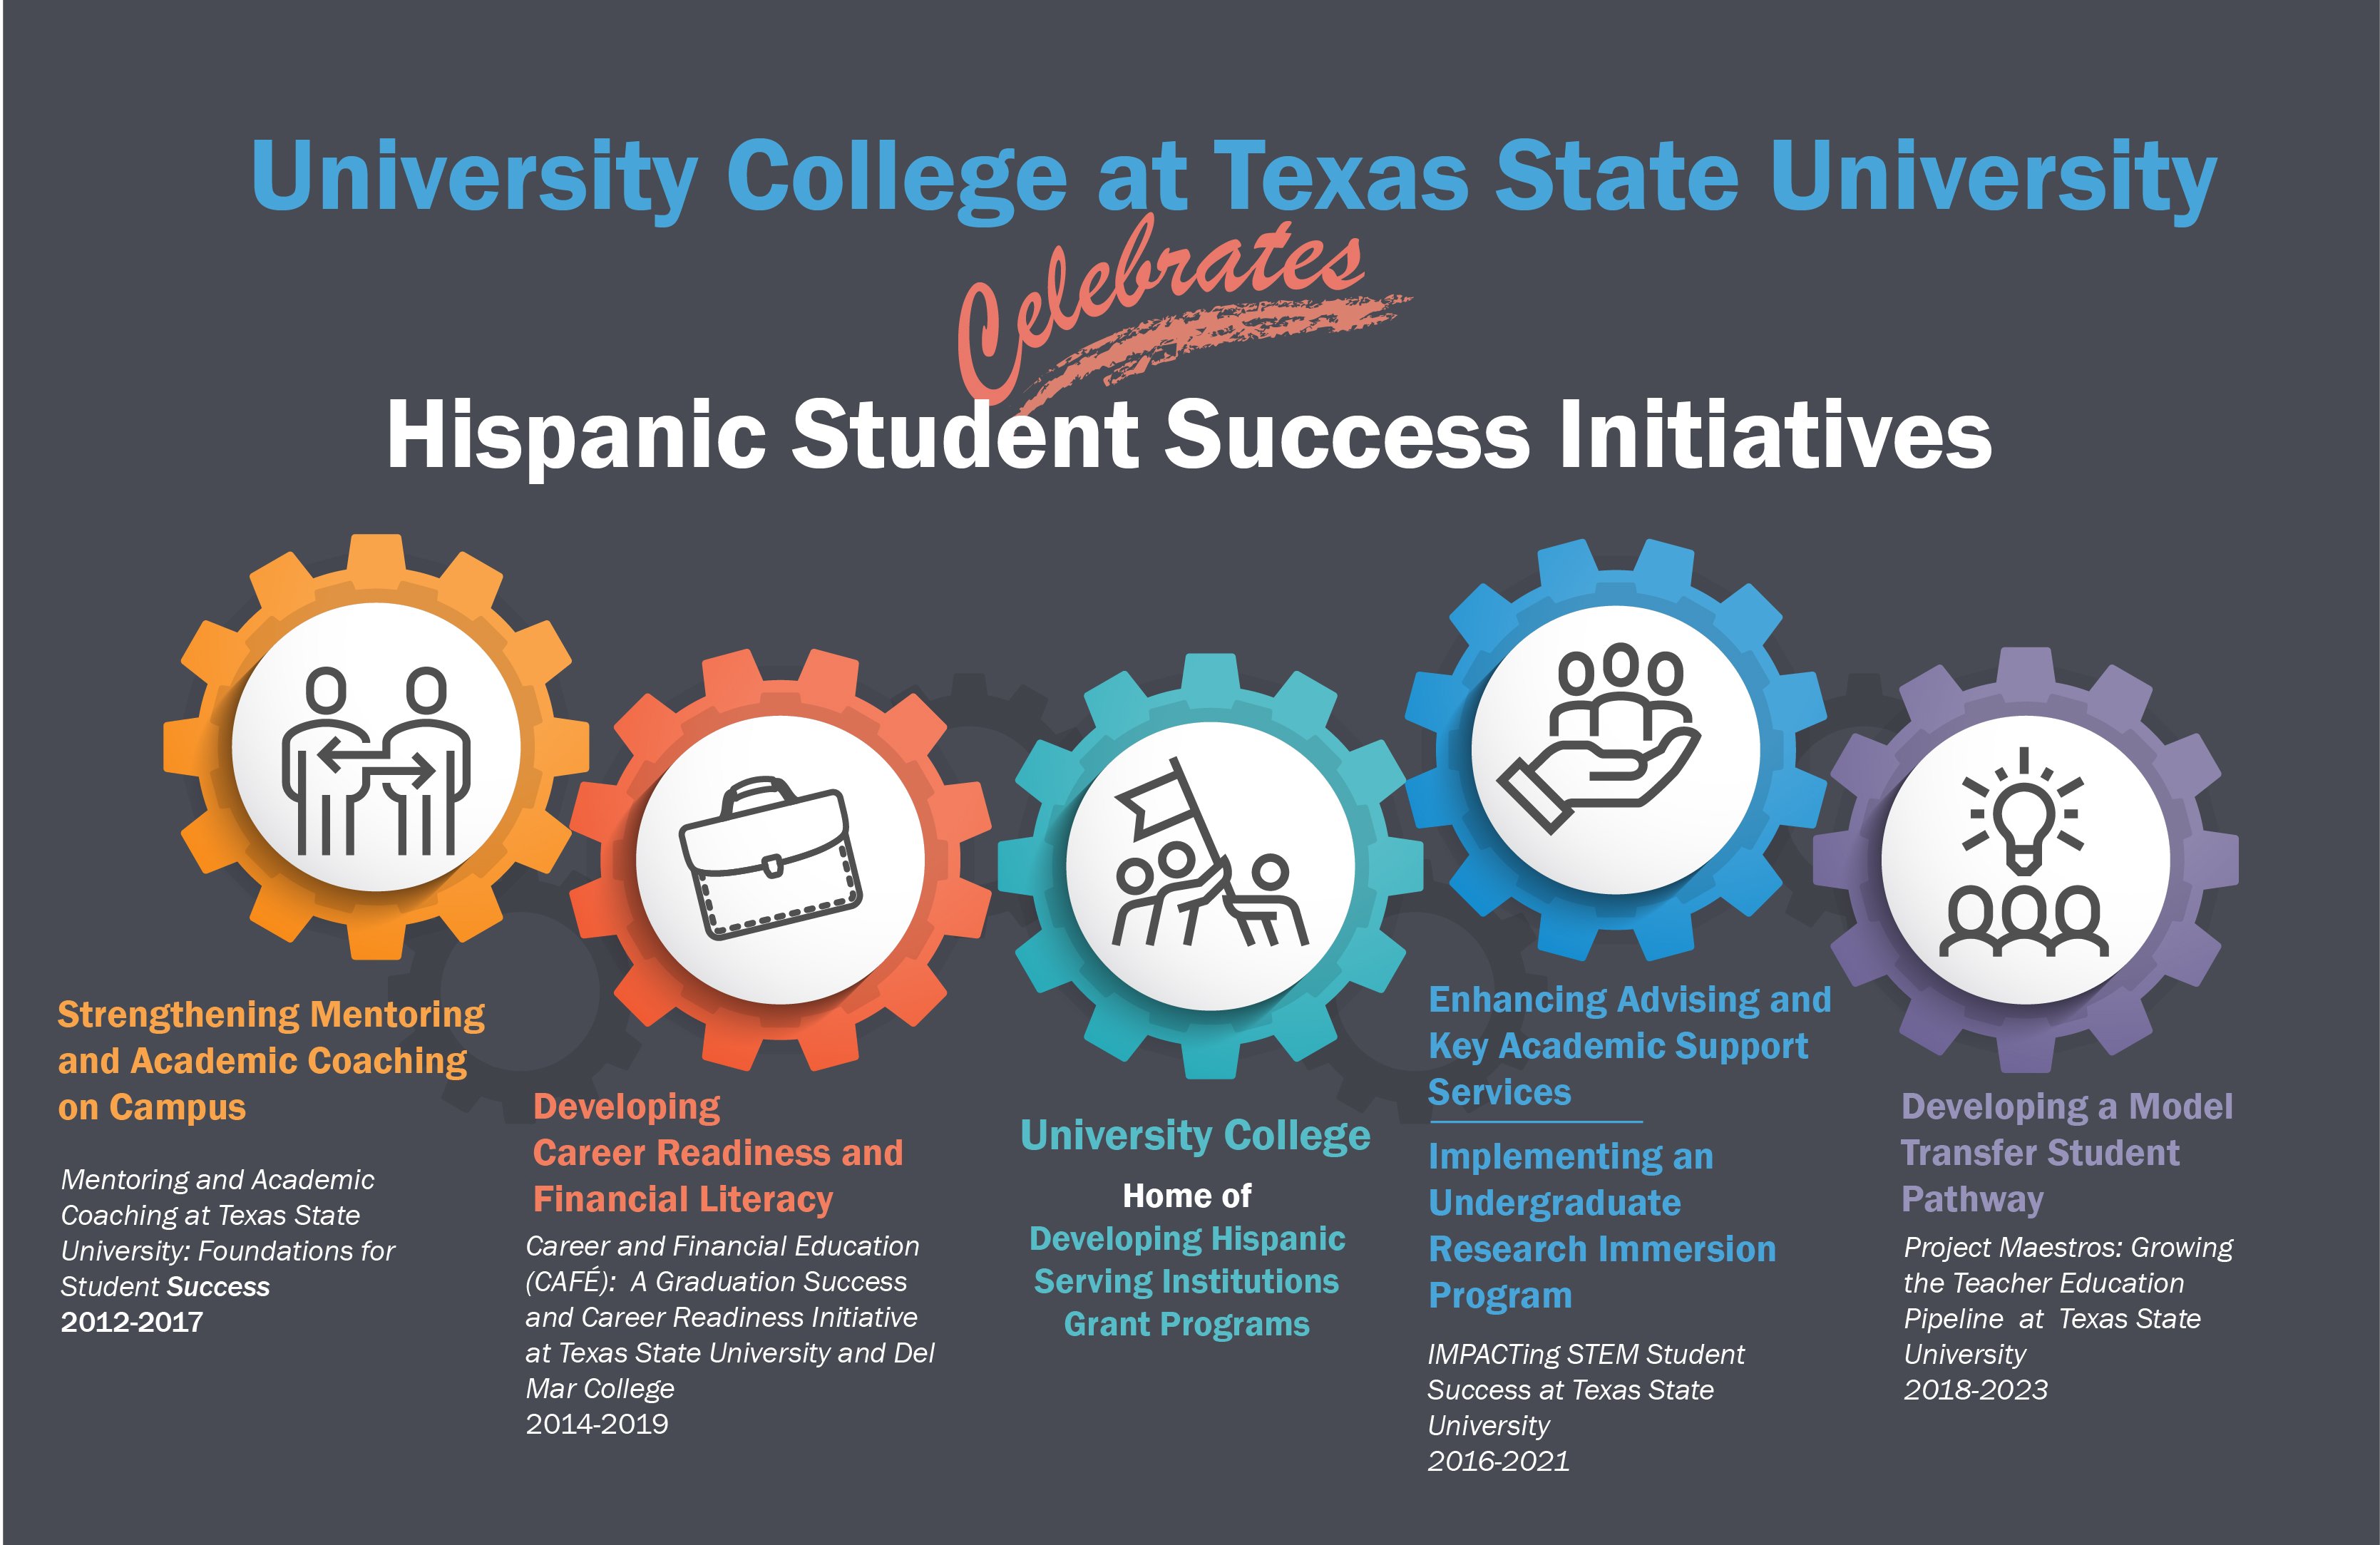 Developing Hispanic Serving Institutions Programs at Texas State University.